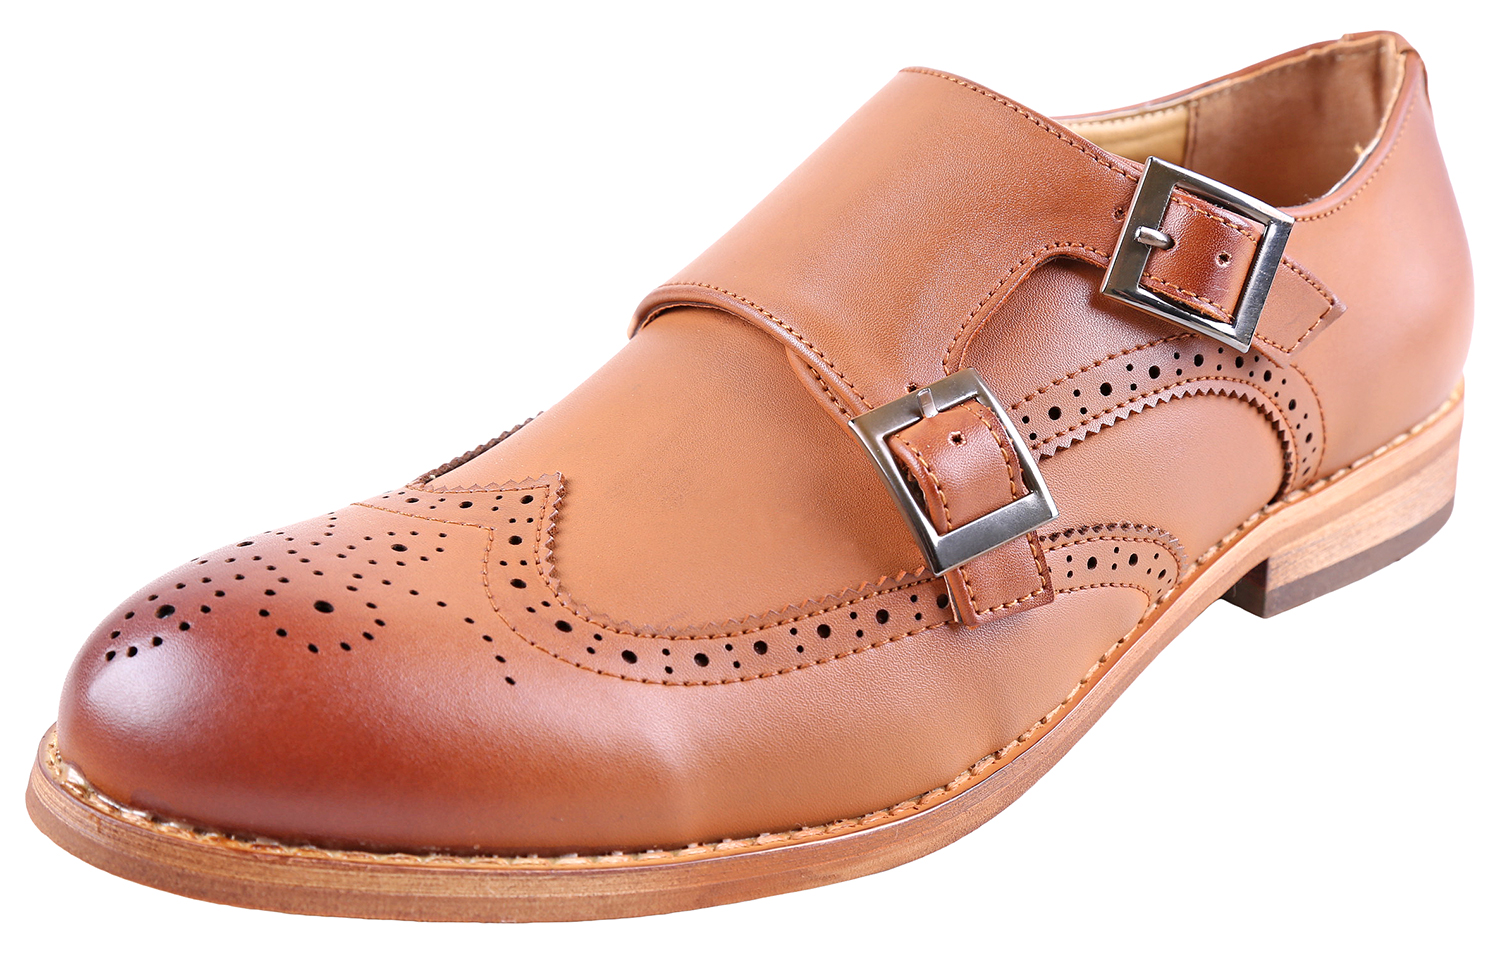 Urban Fox Allen Men's Dress Shoe | Double Monk Strap | Brogue | Wingtip Shoes for Men | Light Brown 12 M US - image 1 of 7